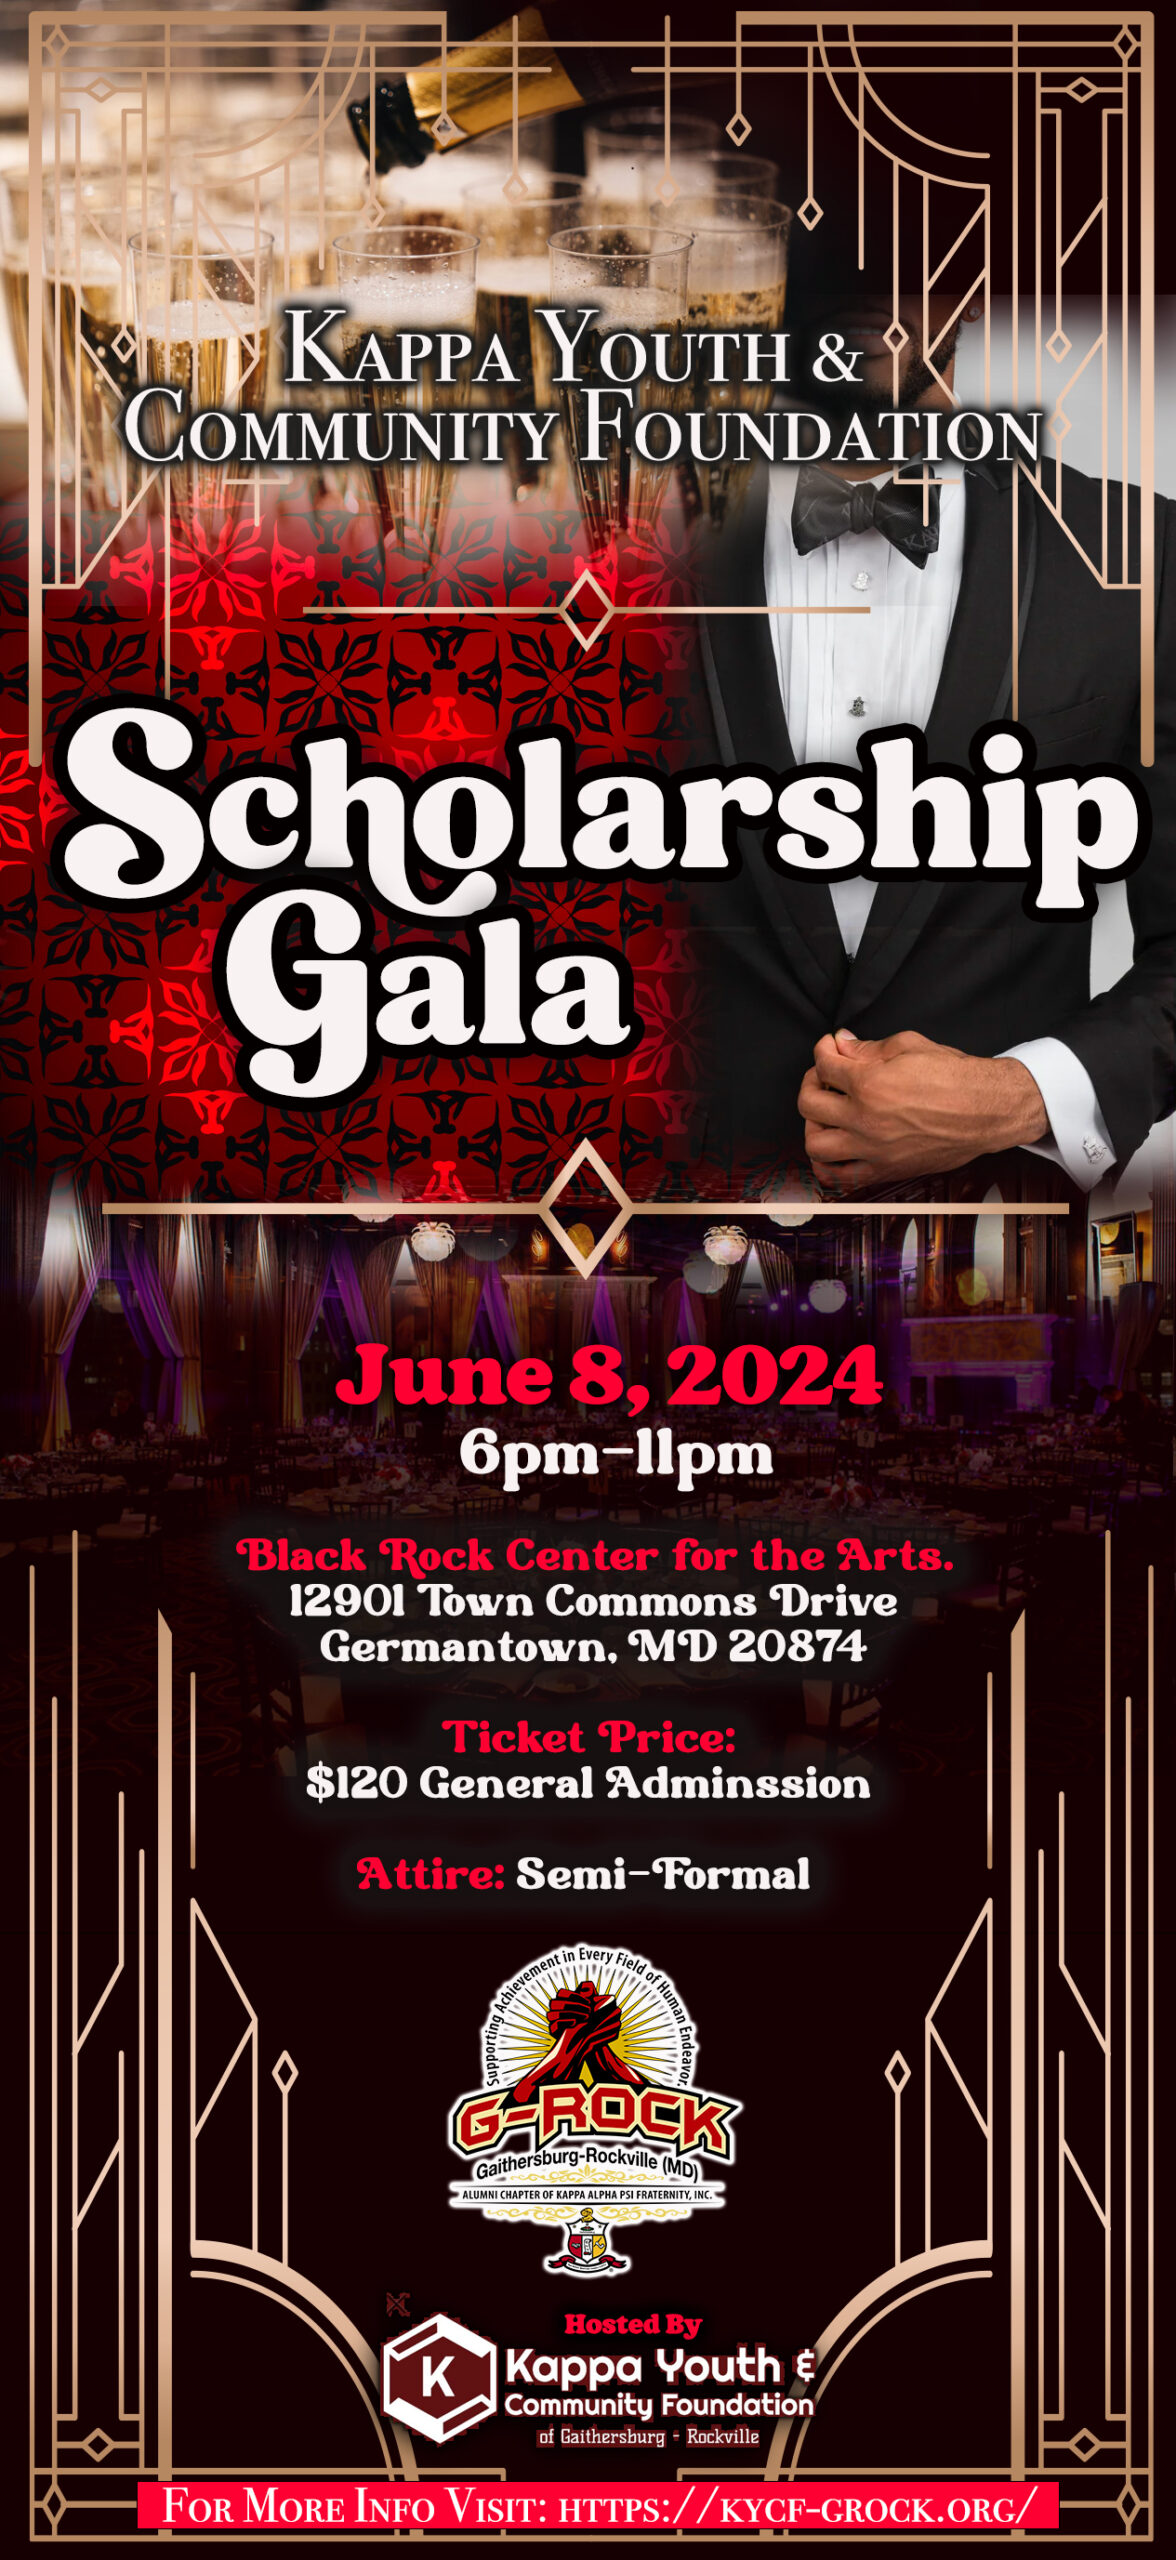 Kappa Youth & Community Foundation Scholarship Gala